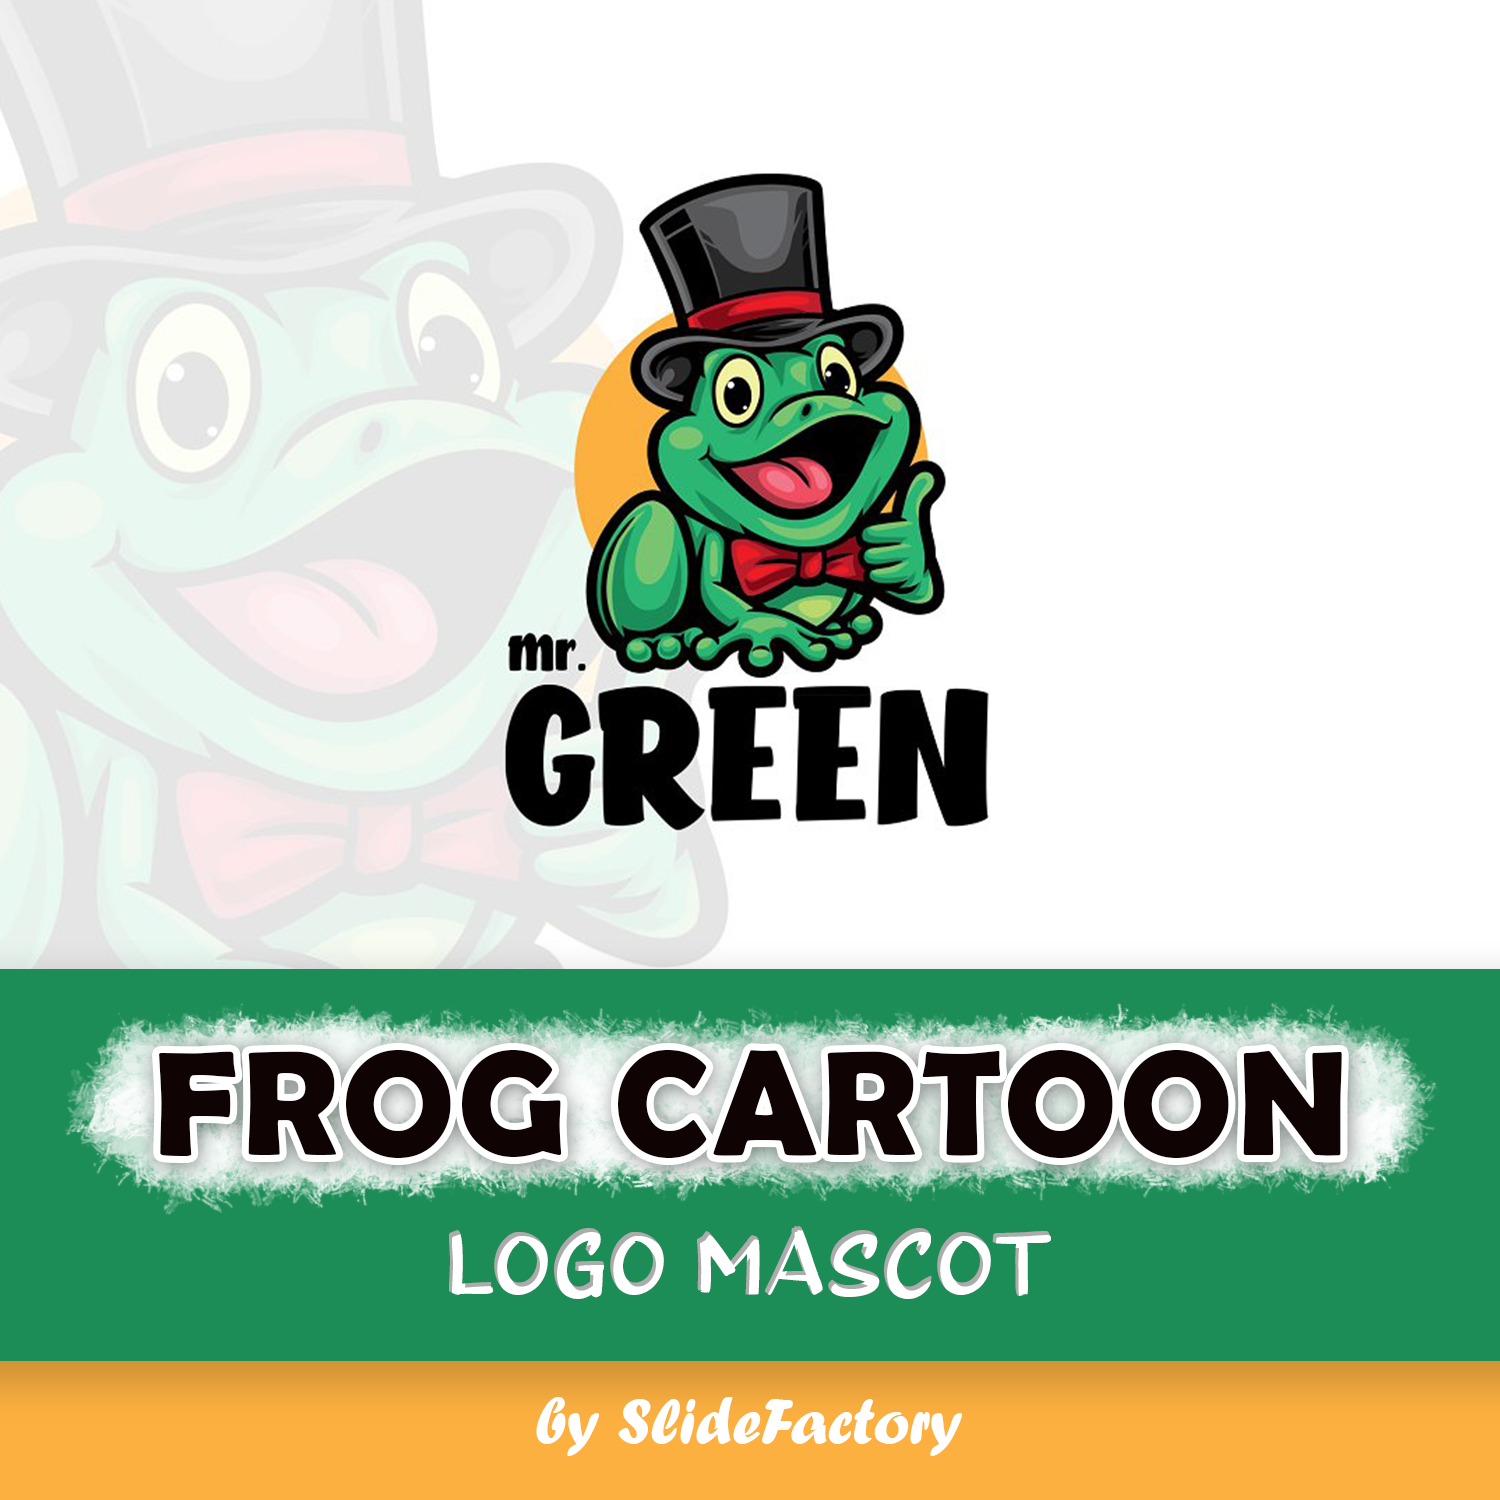 Frog Cartoon Logo Mascot cover.